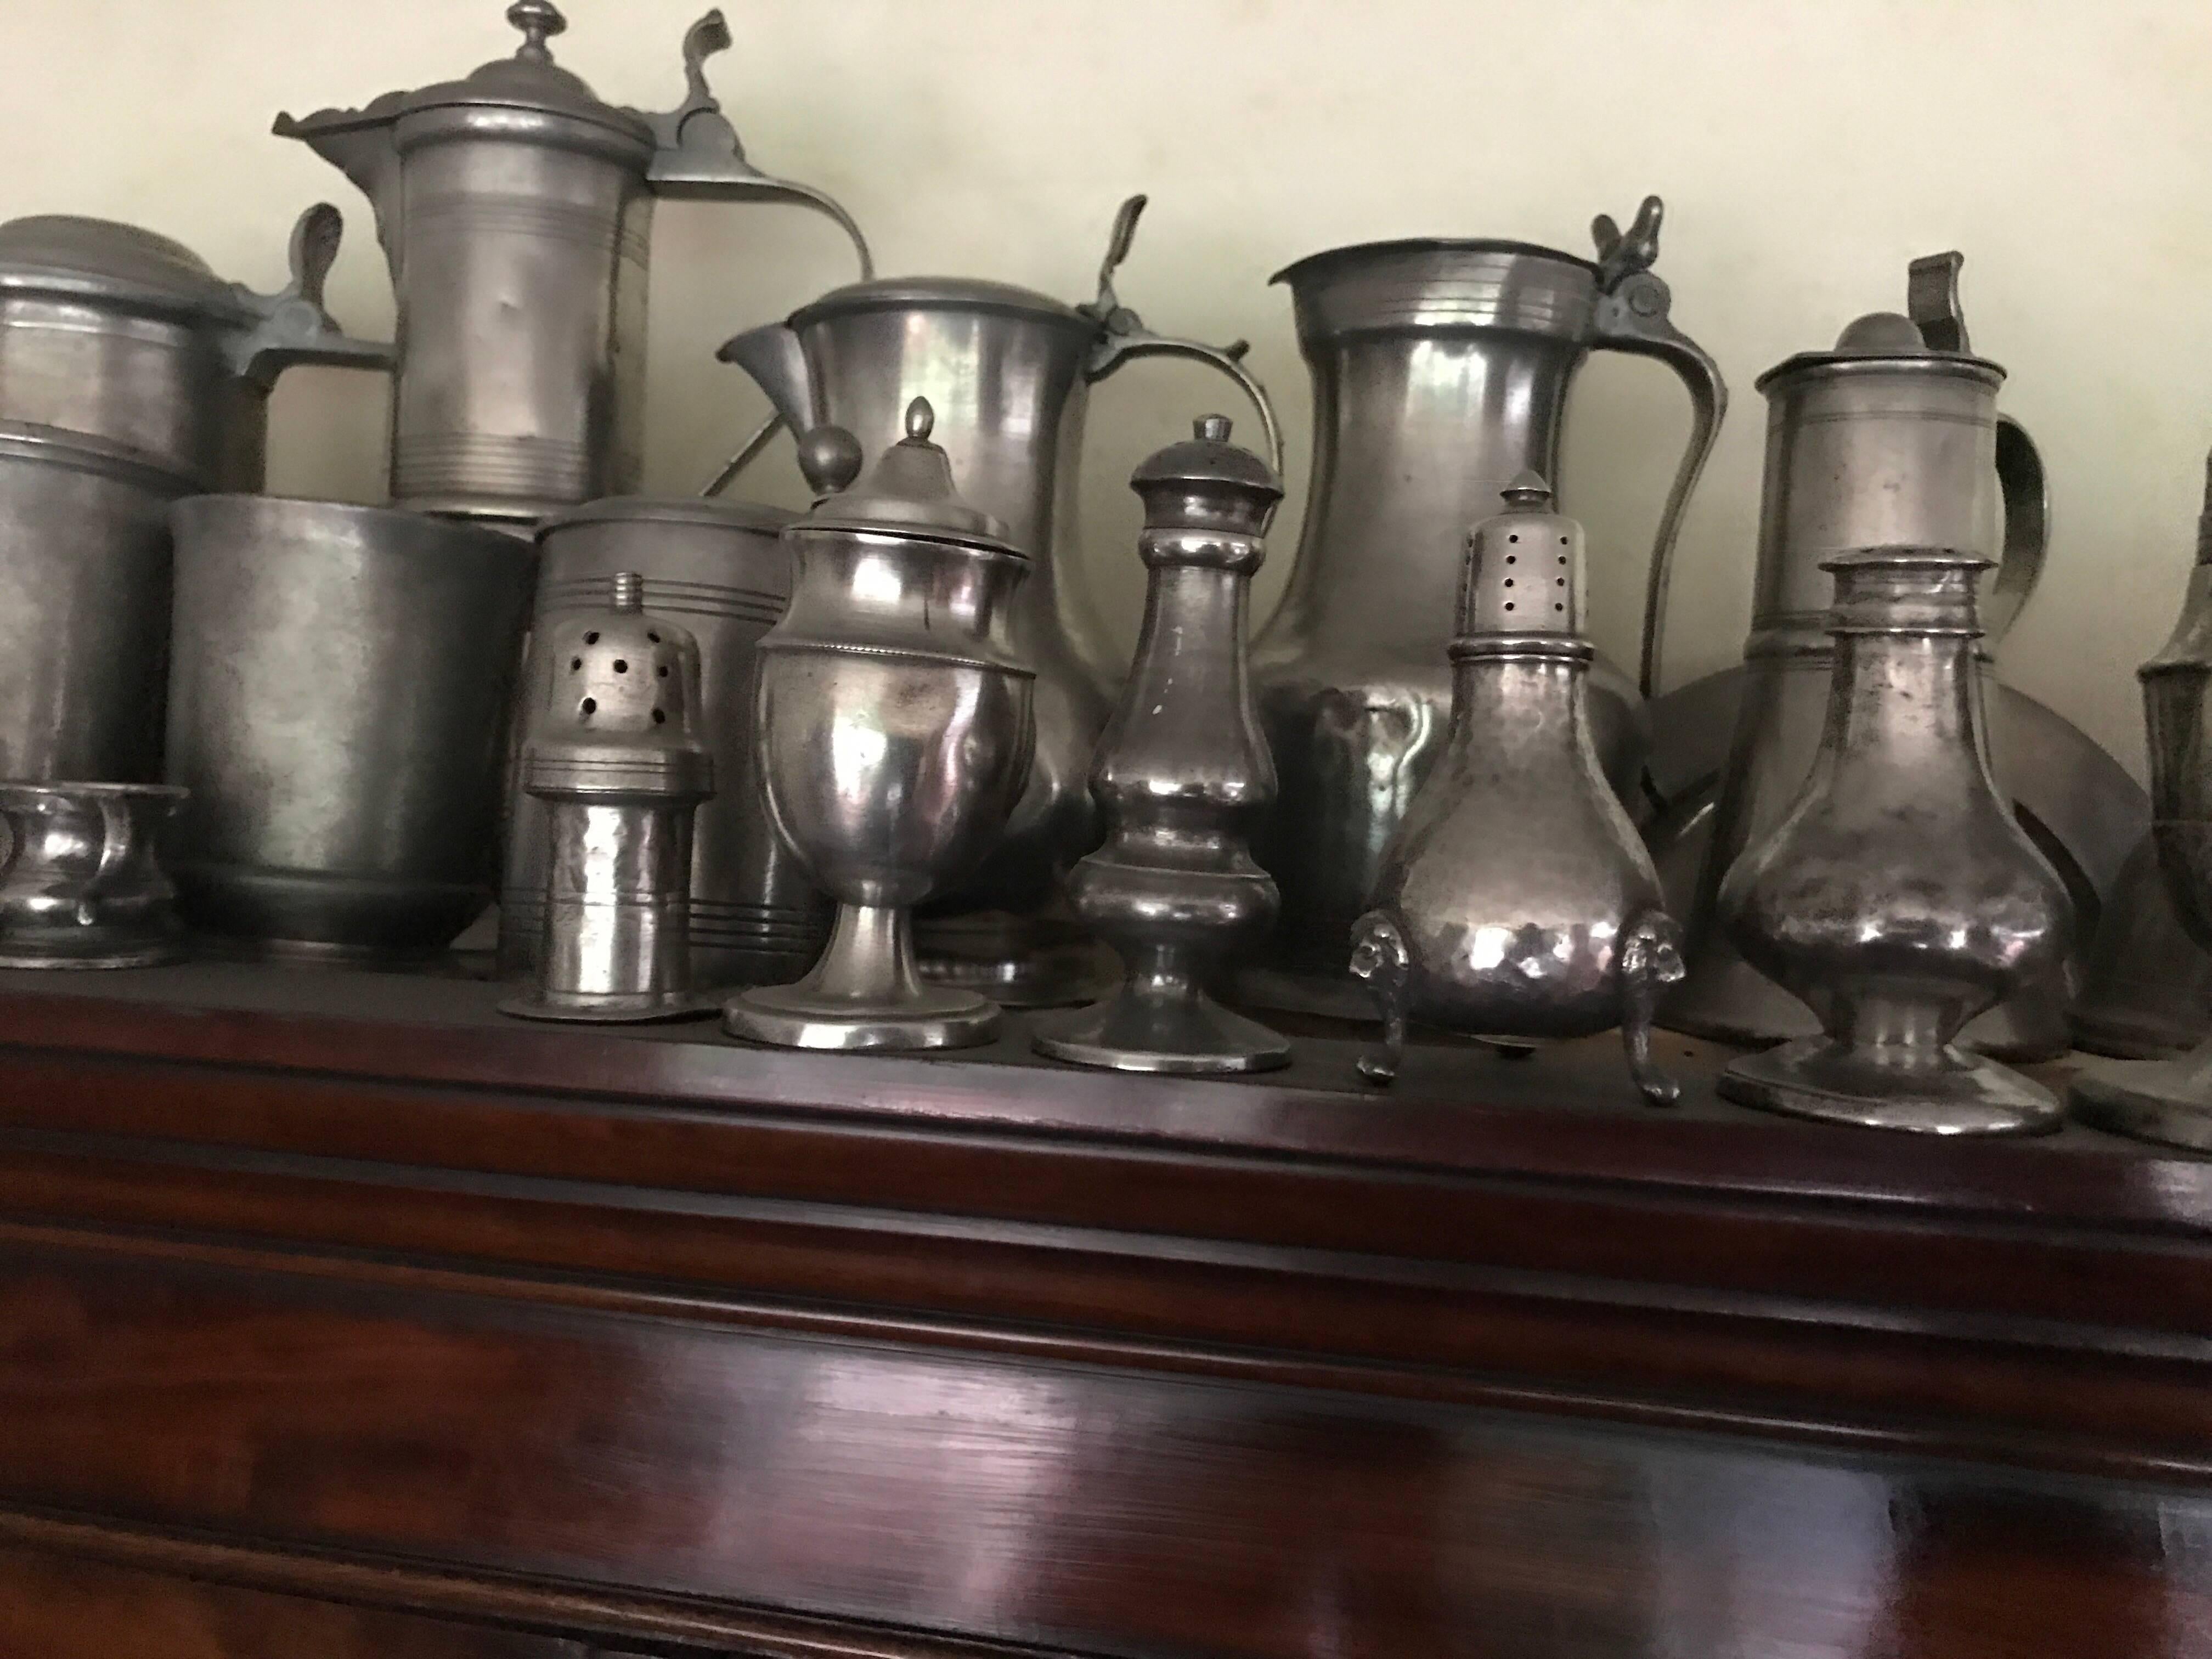 19th century items